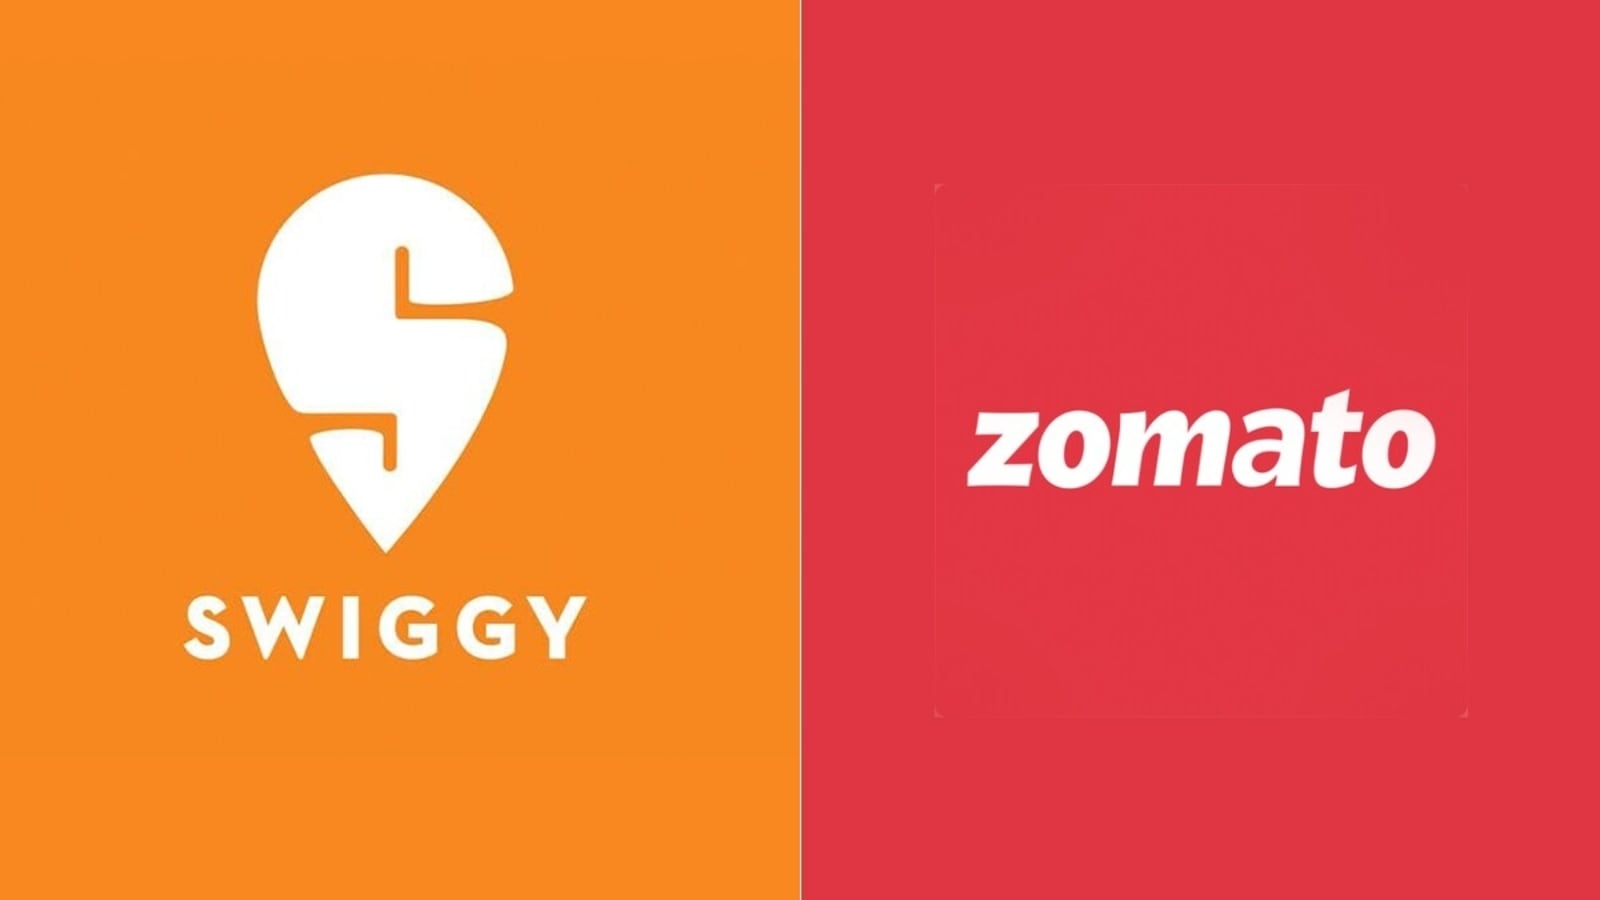 Zomato logo - Social media & Logos Icons